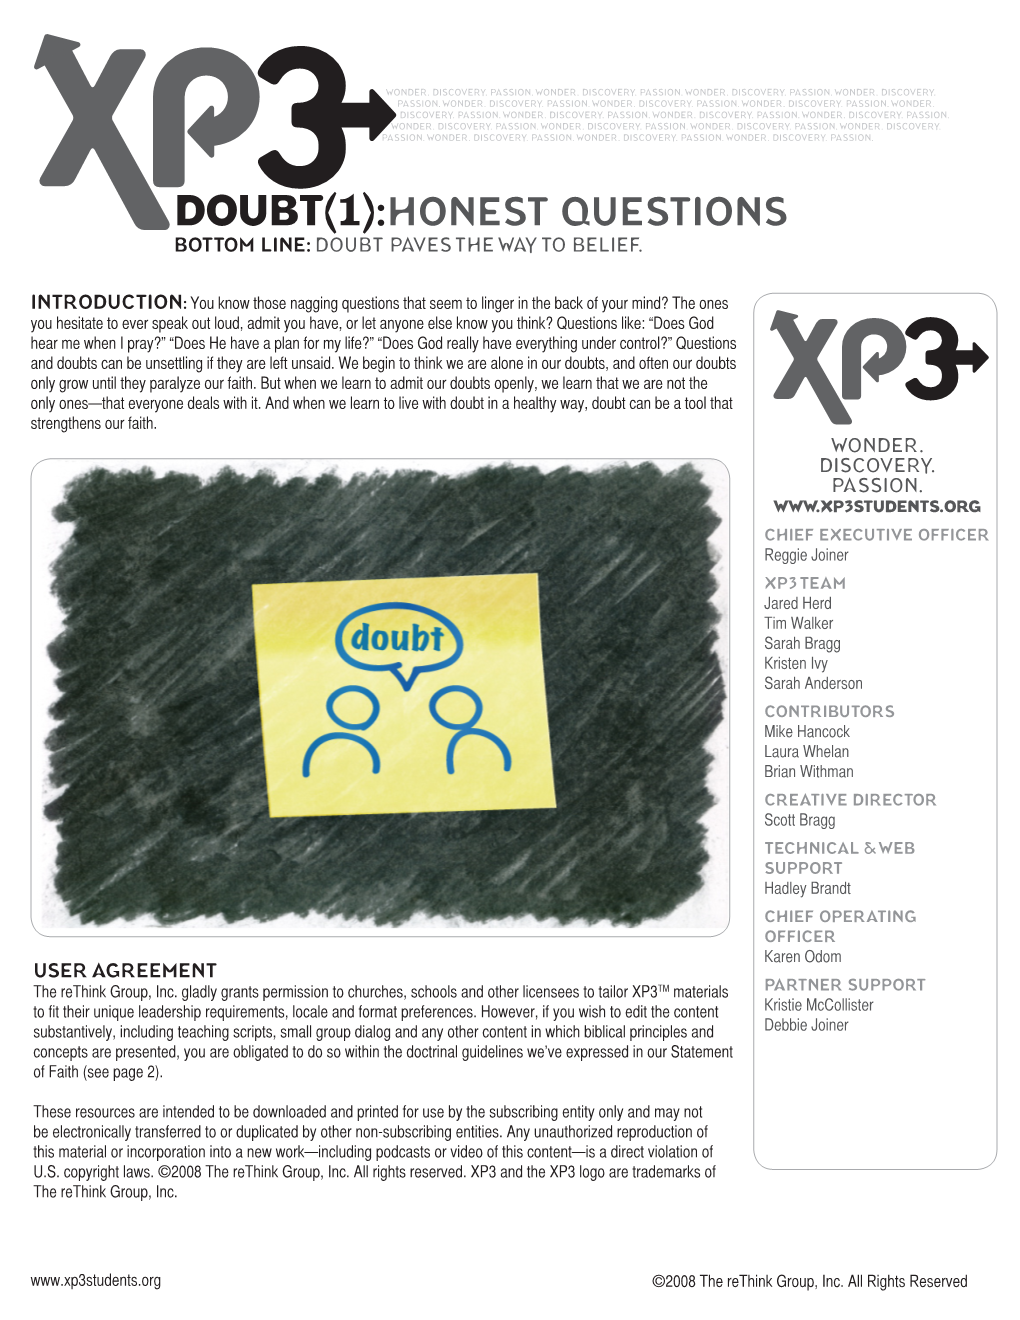 DOUBT(1):HONEST QUESTIONS Bottom Line: Doubt Paves the Way to Belief